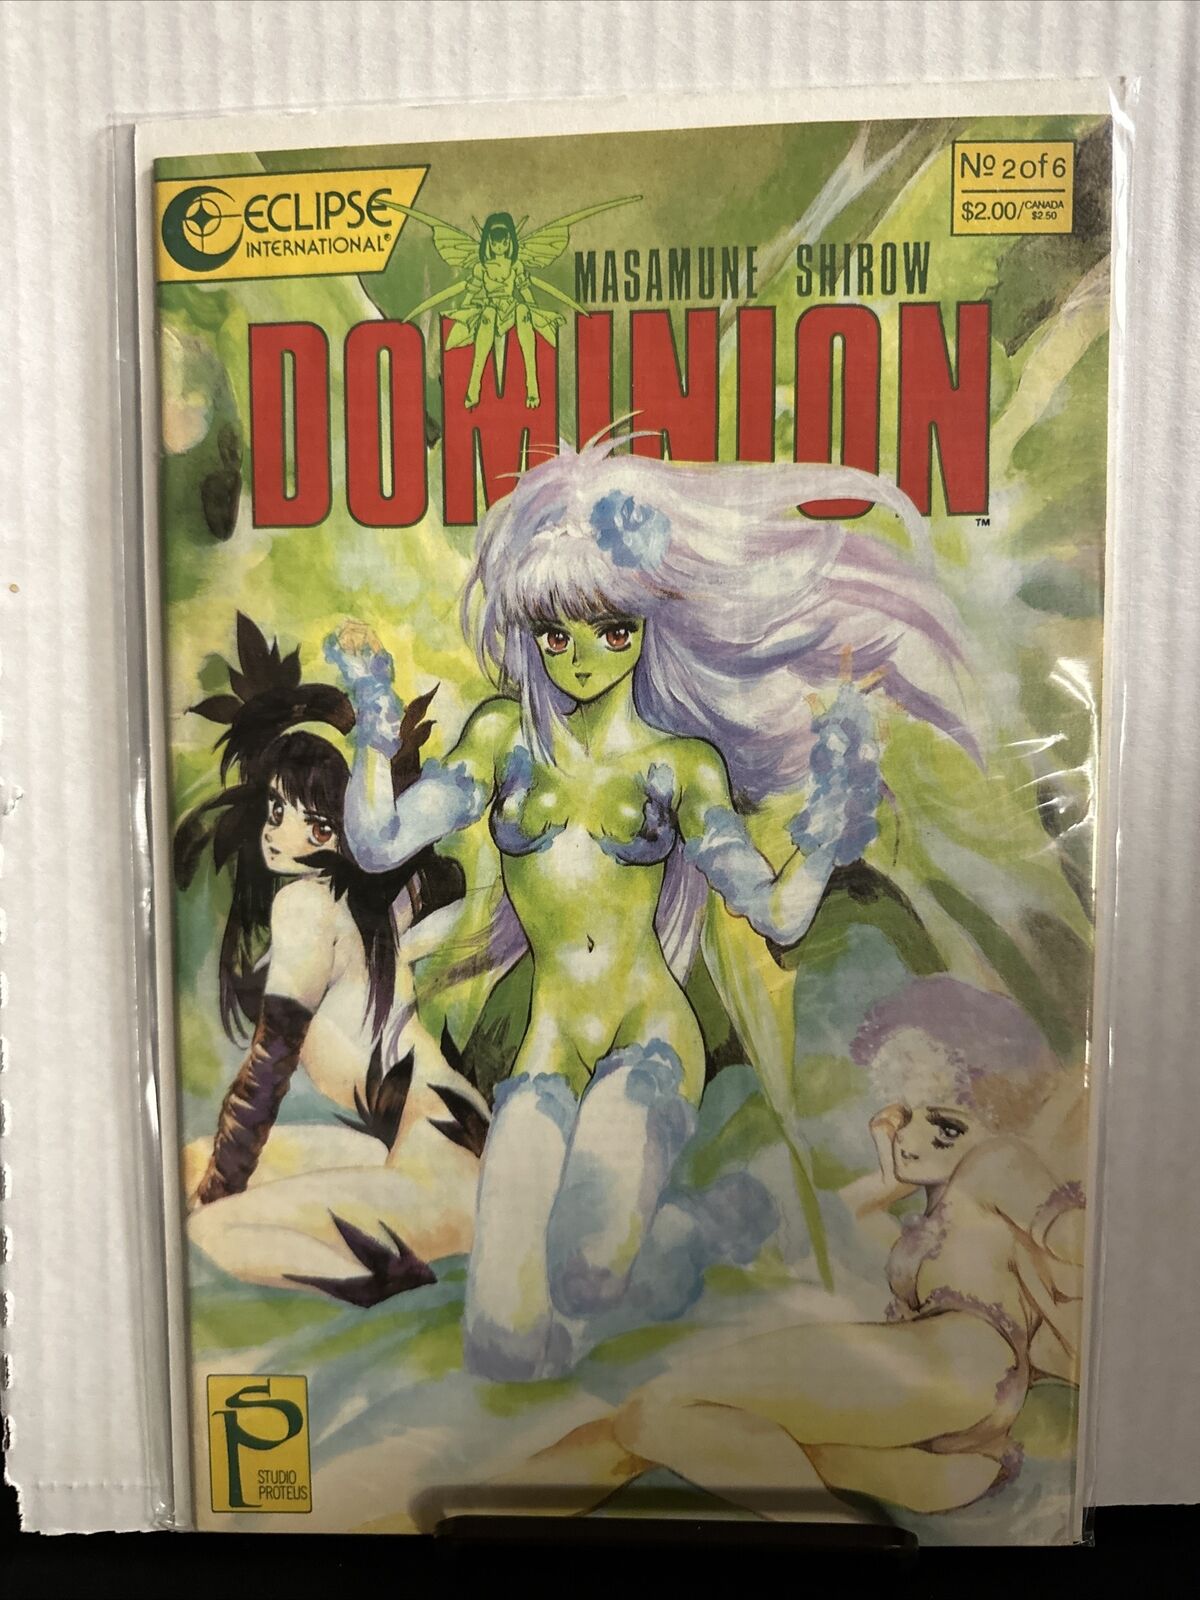 Dominion by Masamune Shirow, 2 of 6 Manga, 1996 Eclipse Comic High Grade